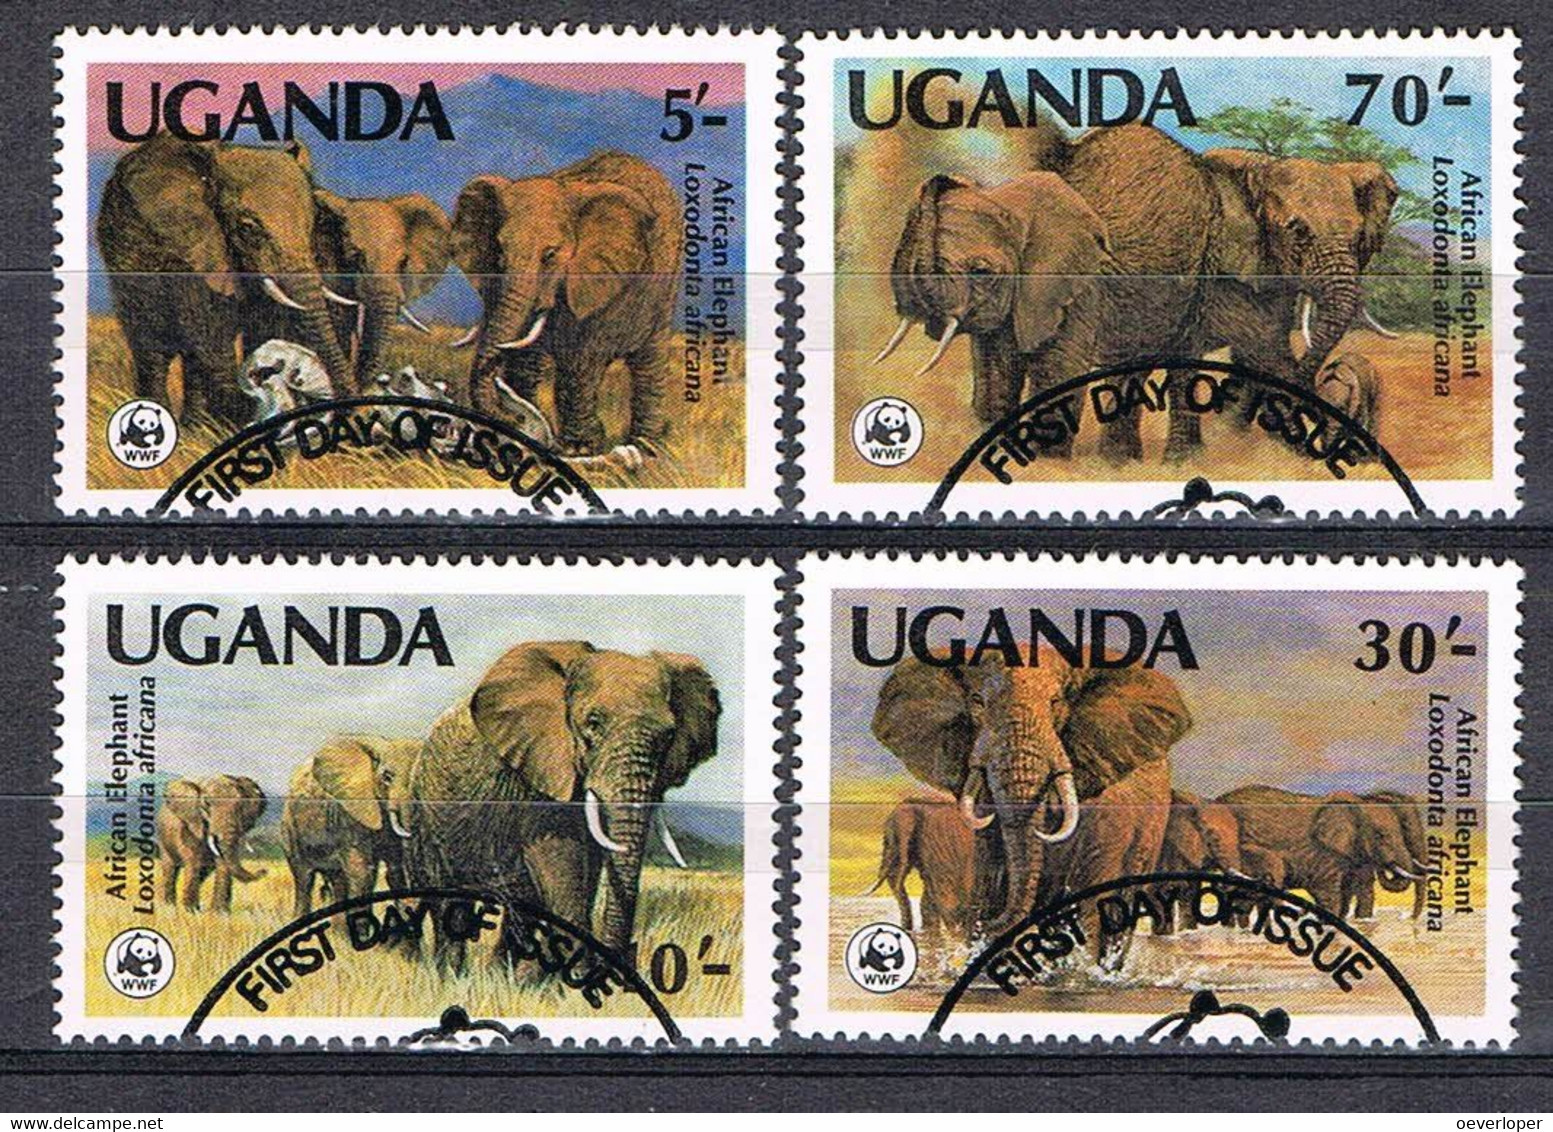 WWF Uganda 1983 Elephants Used - Used Stamps